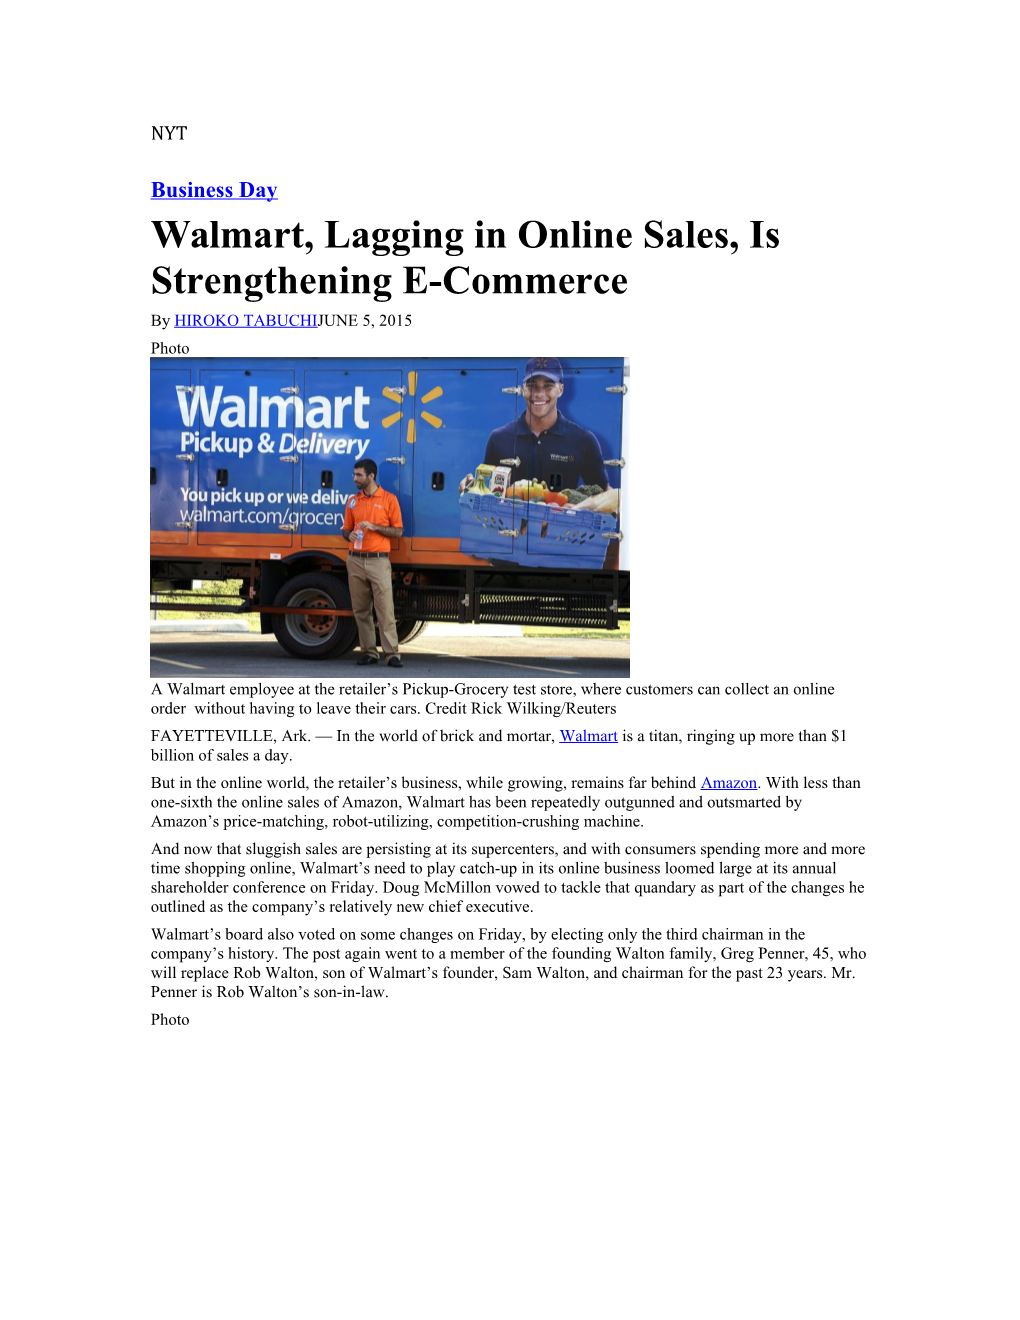 Walmart, Lagging in Online Sales, Is Strengthening E-Commerce